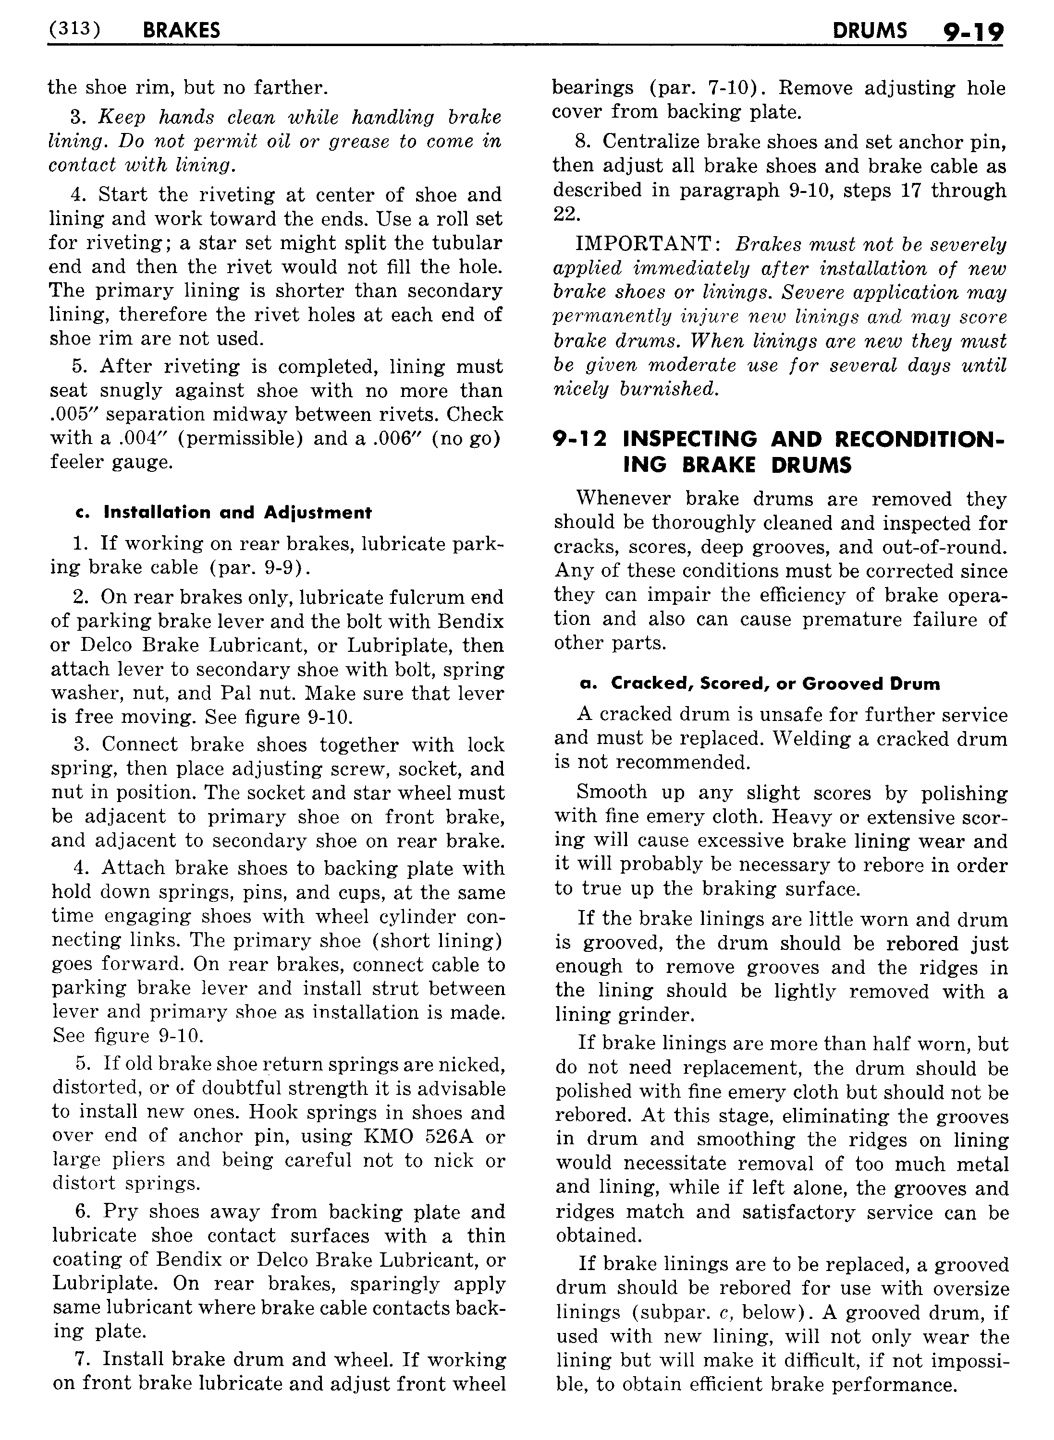 n_10 1956 Buick Shop Manual - Brakes-019-019.jpg